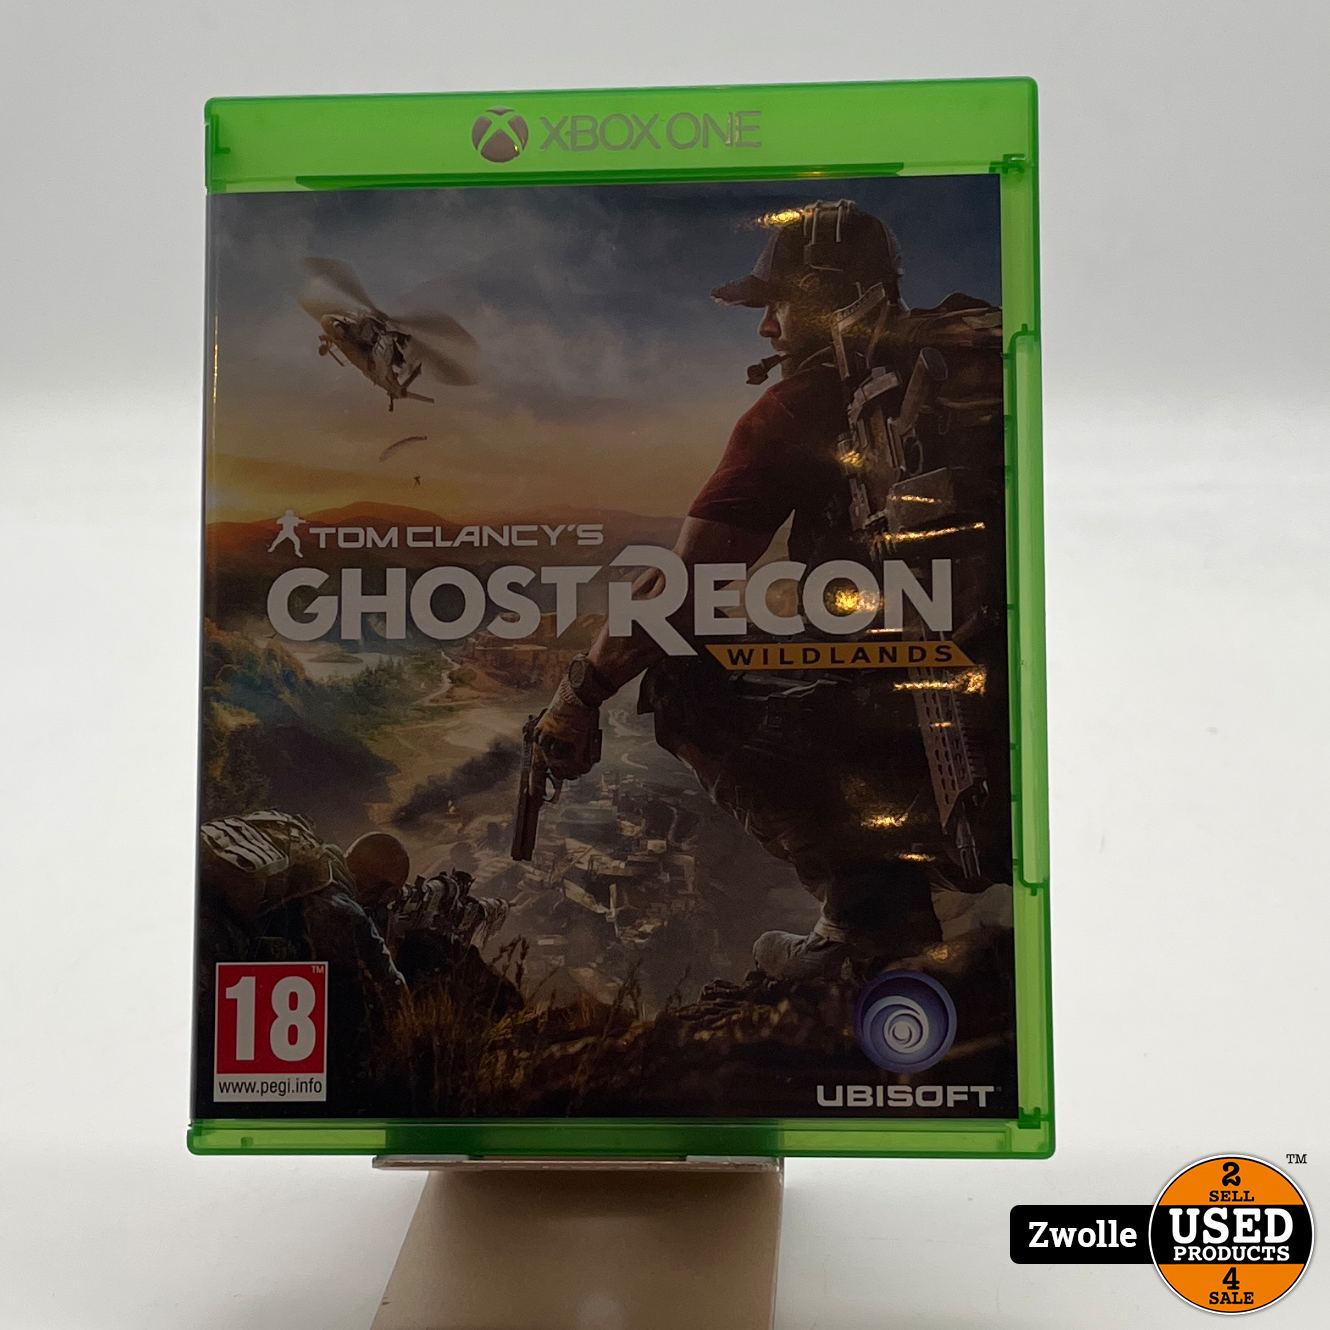 Afsnijden Standaard De gasten XBOX one game Tom Clancy Ghost Recon Wildlands - Used Products Zwolle